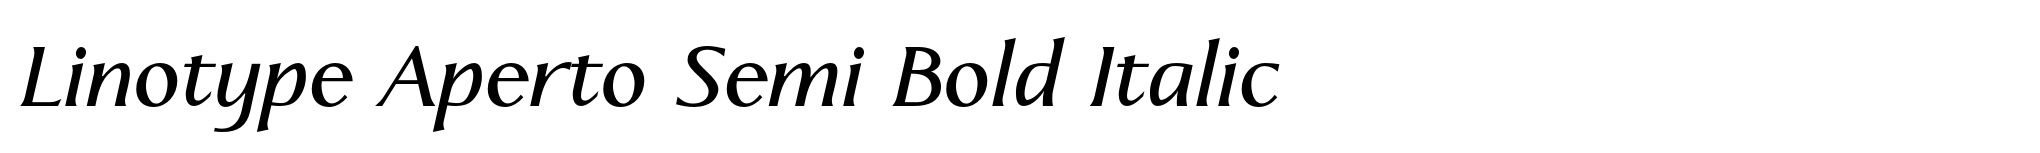 Linotype Aperto Semi Bold Italic image